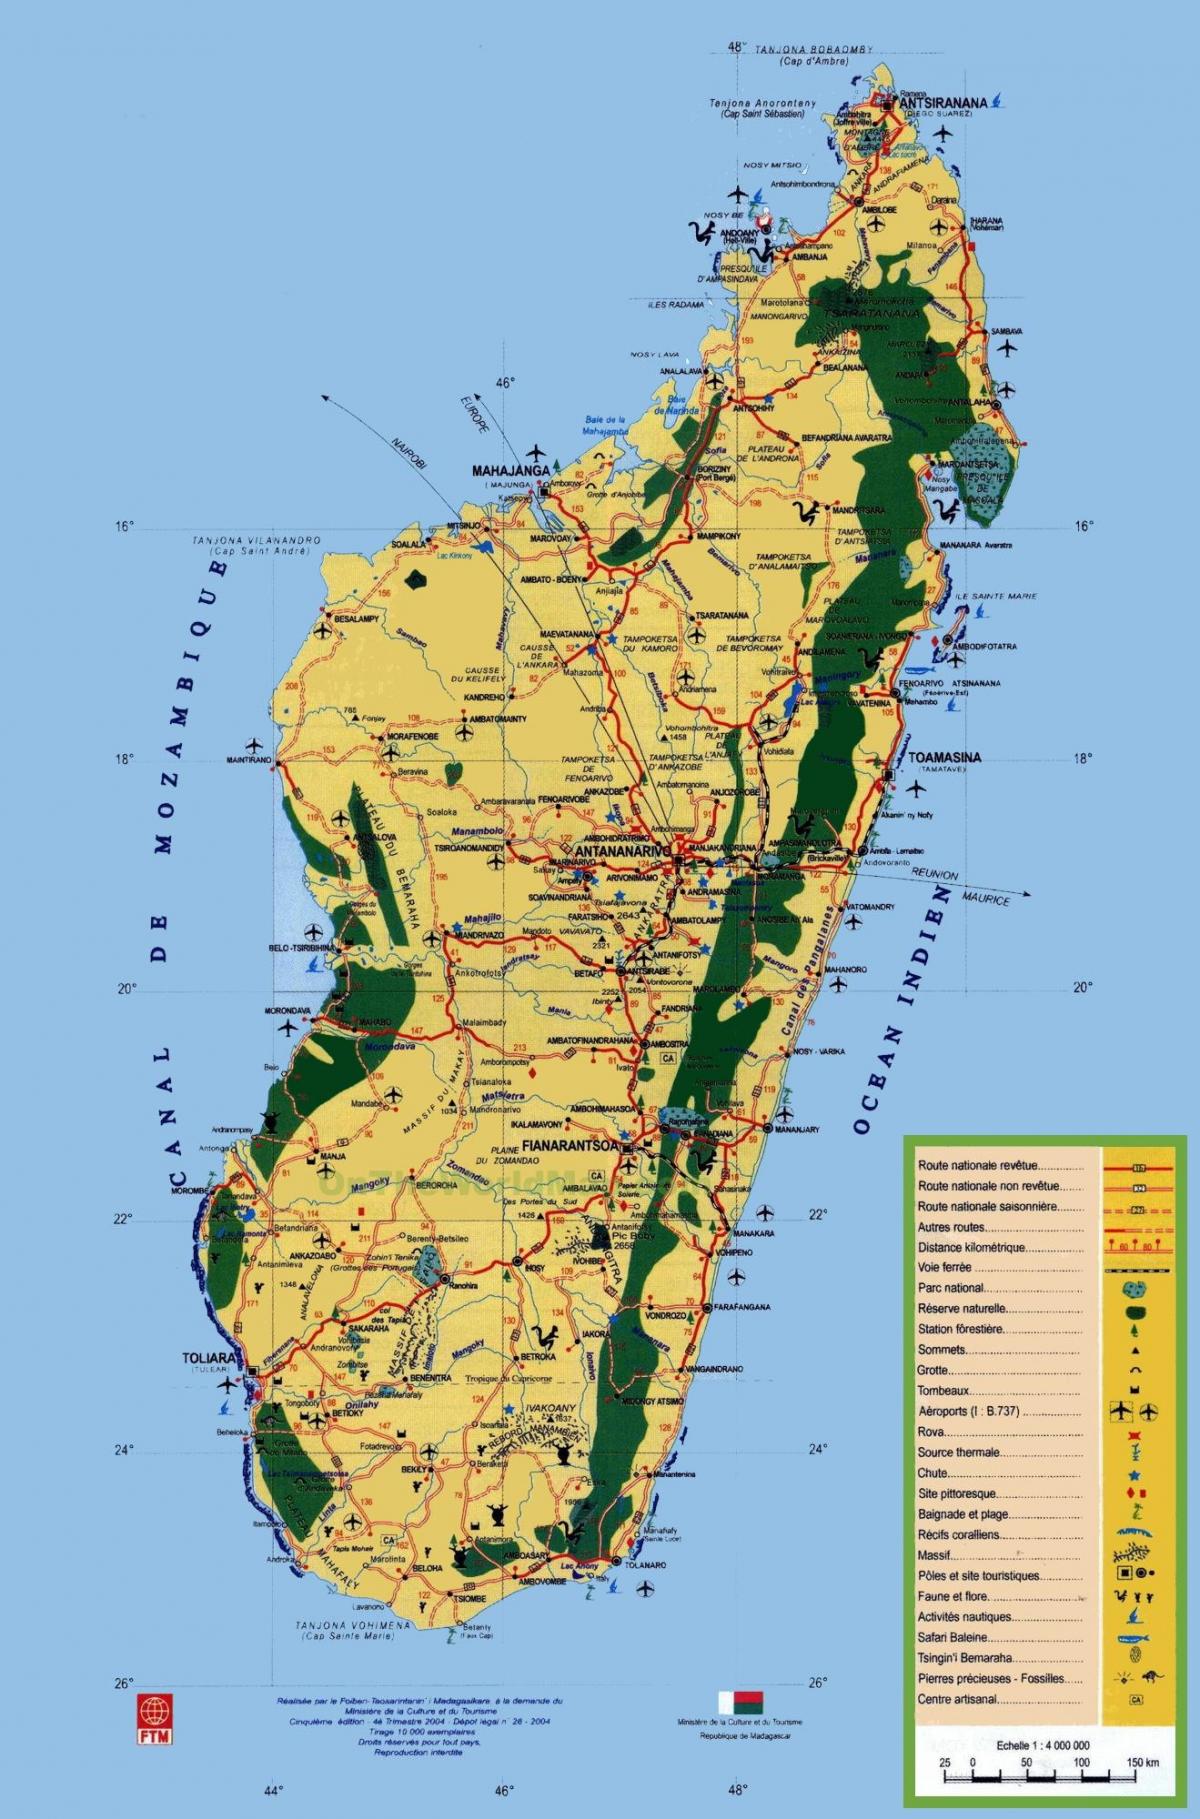 Madagaskar toeriste-aantreklikhede kaart